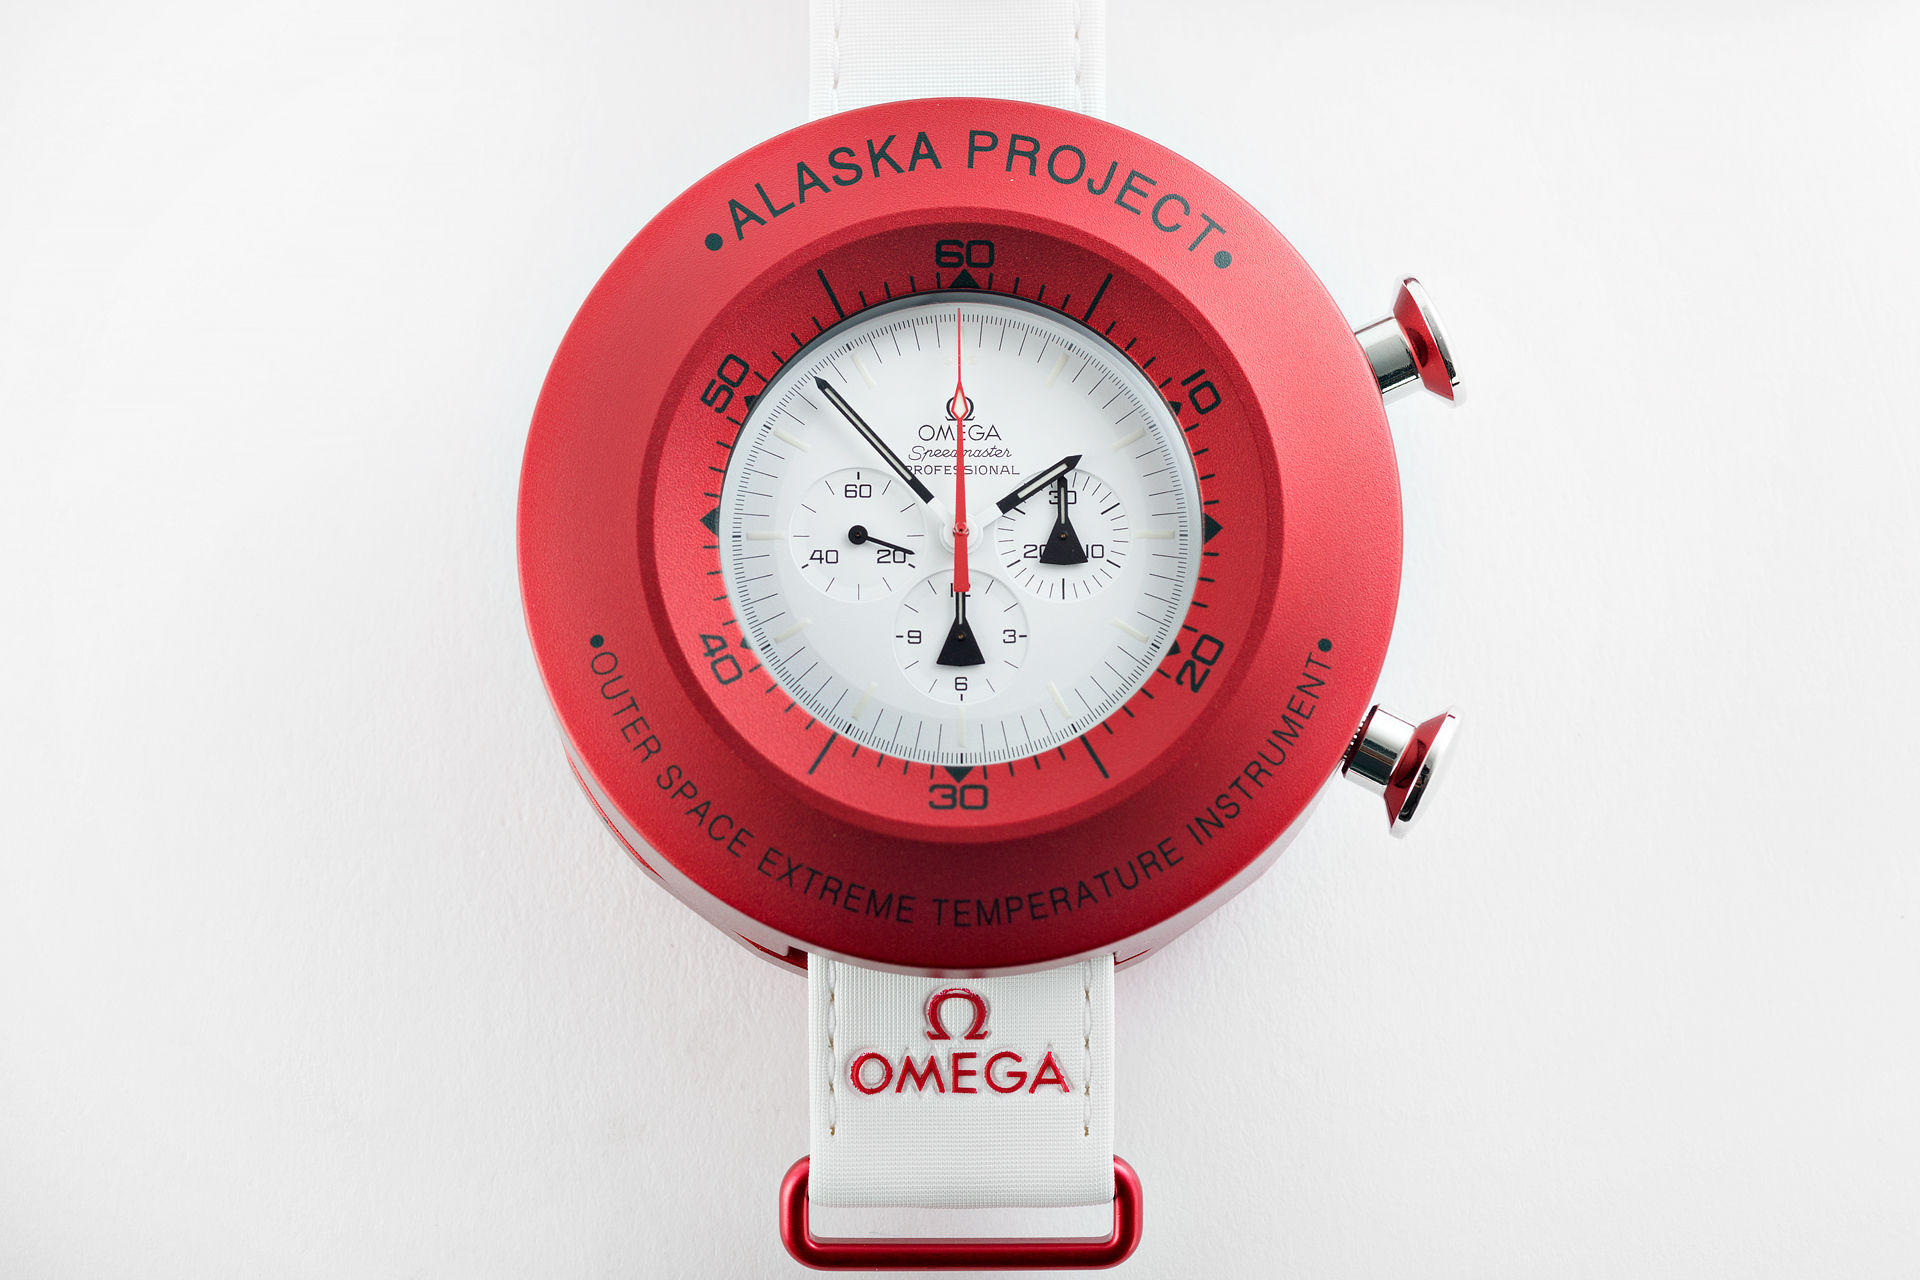 ref 311.32.42.30.04.001 | Complete Set 'Limited Edition' | Omega Speedmaster Alaska Project